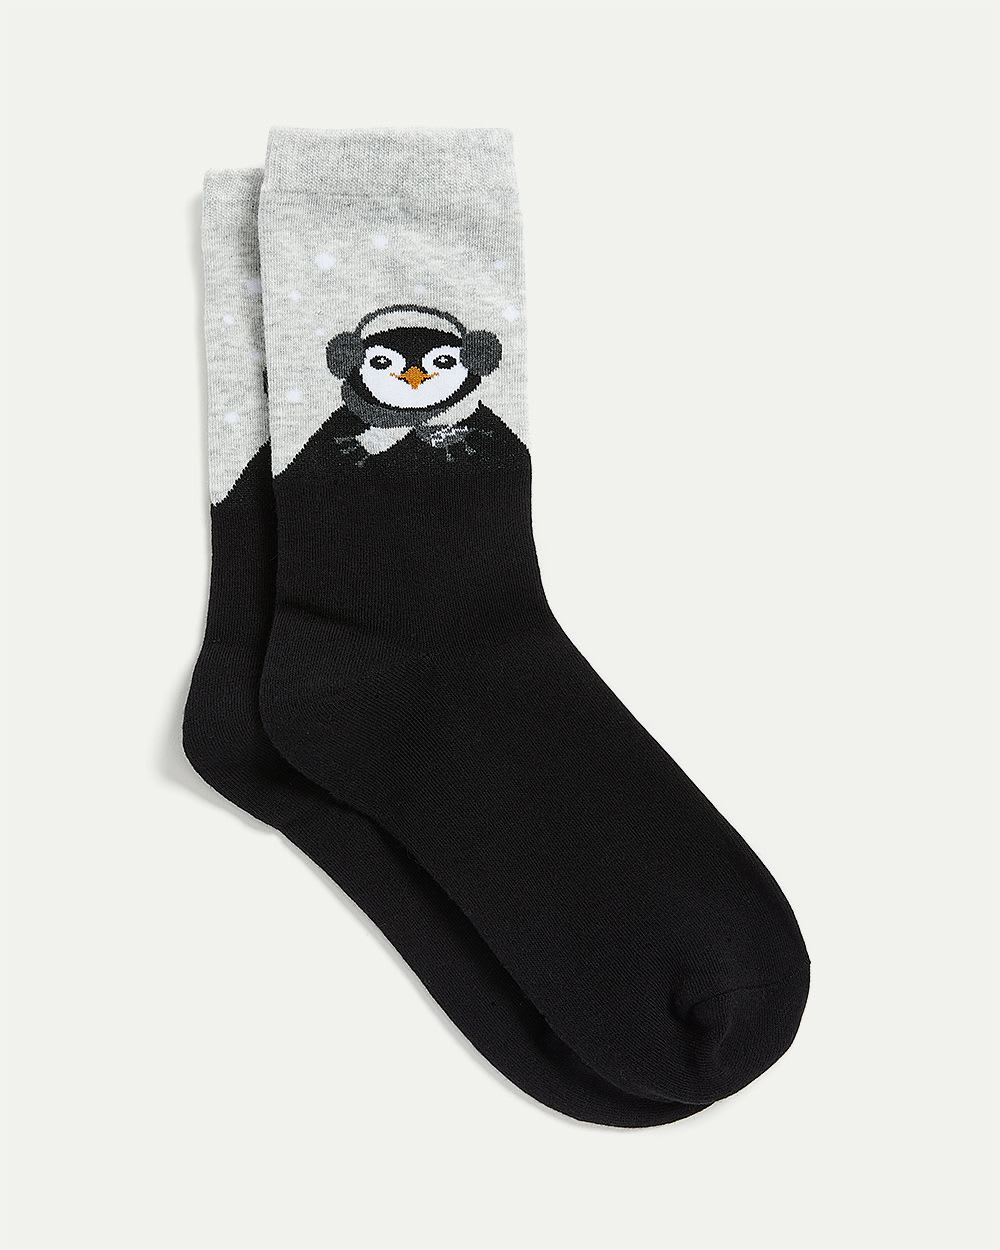 Cotton Socks with a Festive Penguin